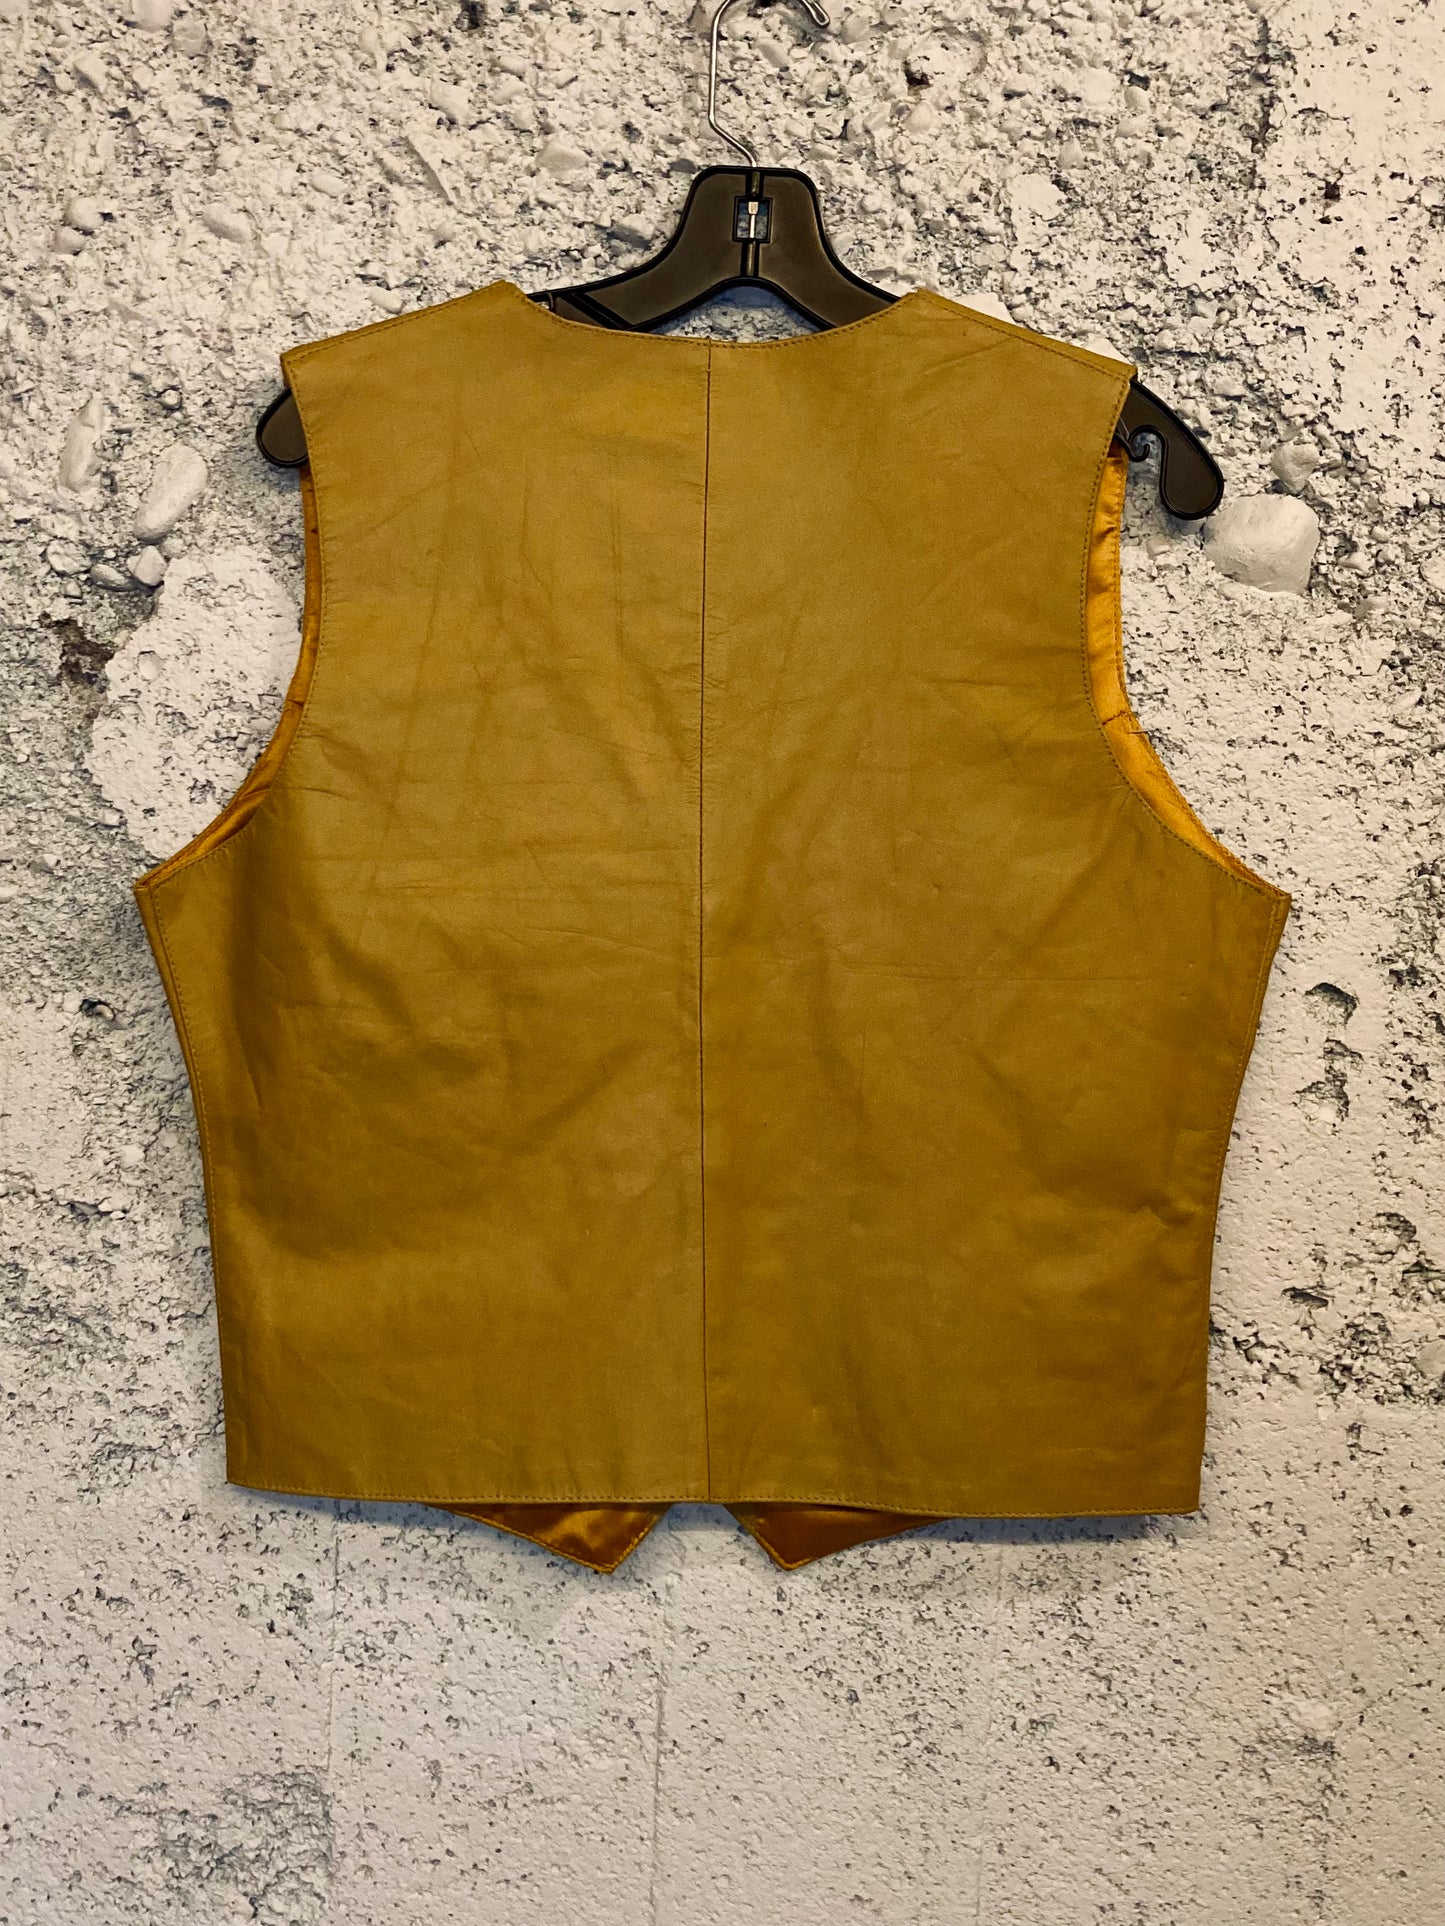 VTG Leather Deadstock Vest